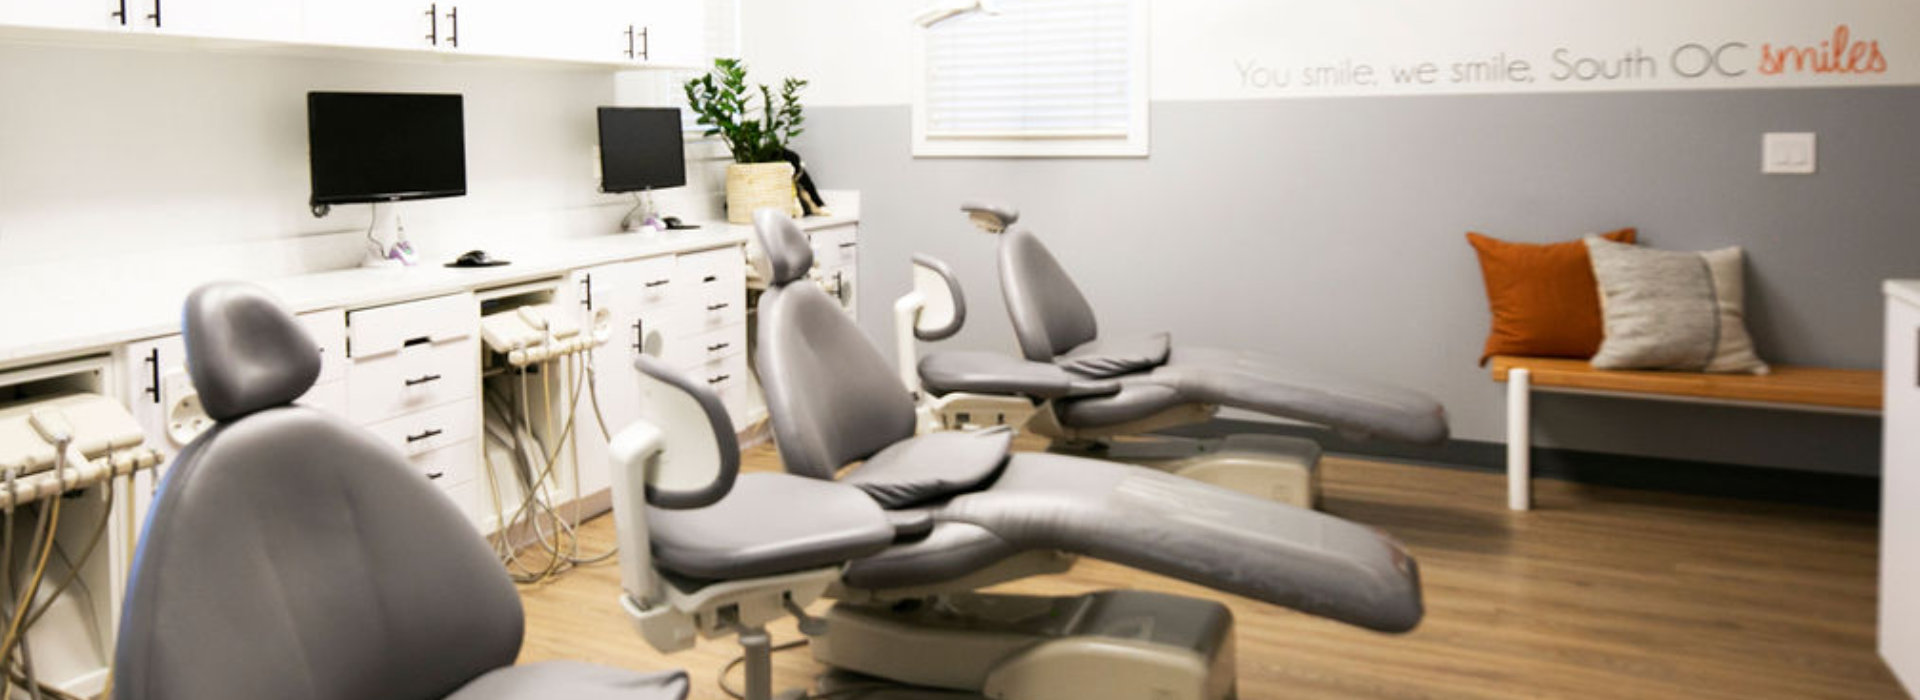 South OC Pediatric Dentistry & Orthodontics Dental Surgery Room